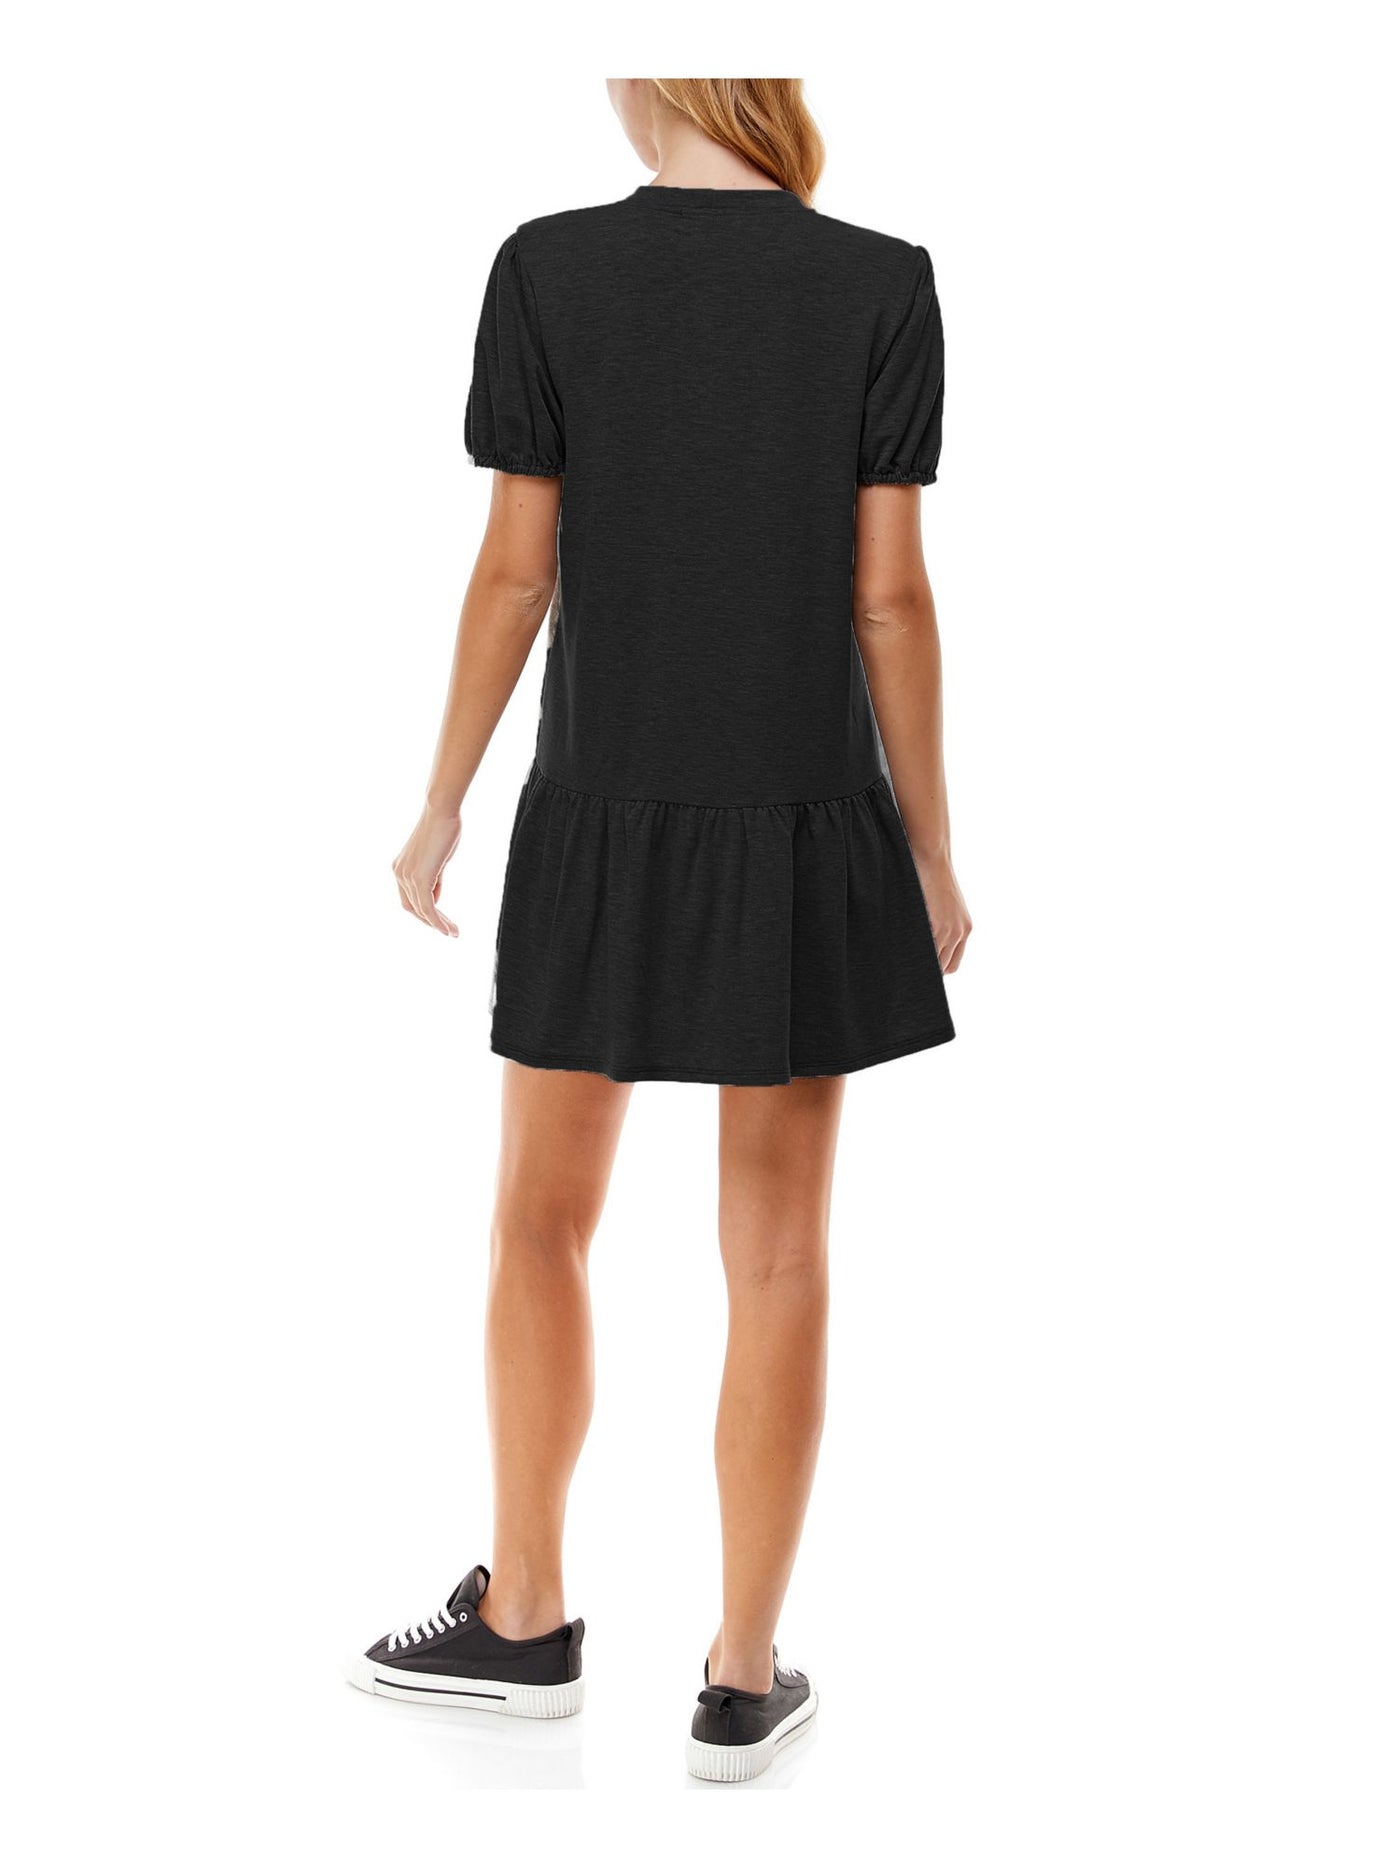 KINGSTON GREY Womens Black Short Sleeve Round Neck Short Drop Waist Dress Juniors XS